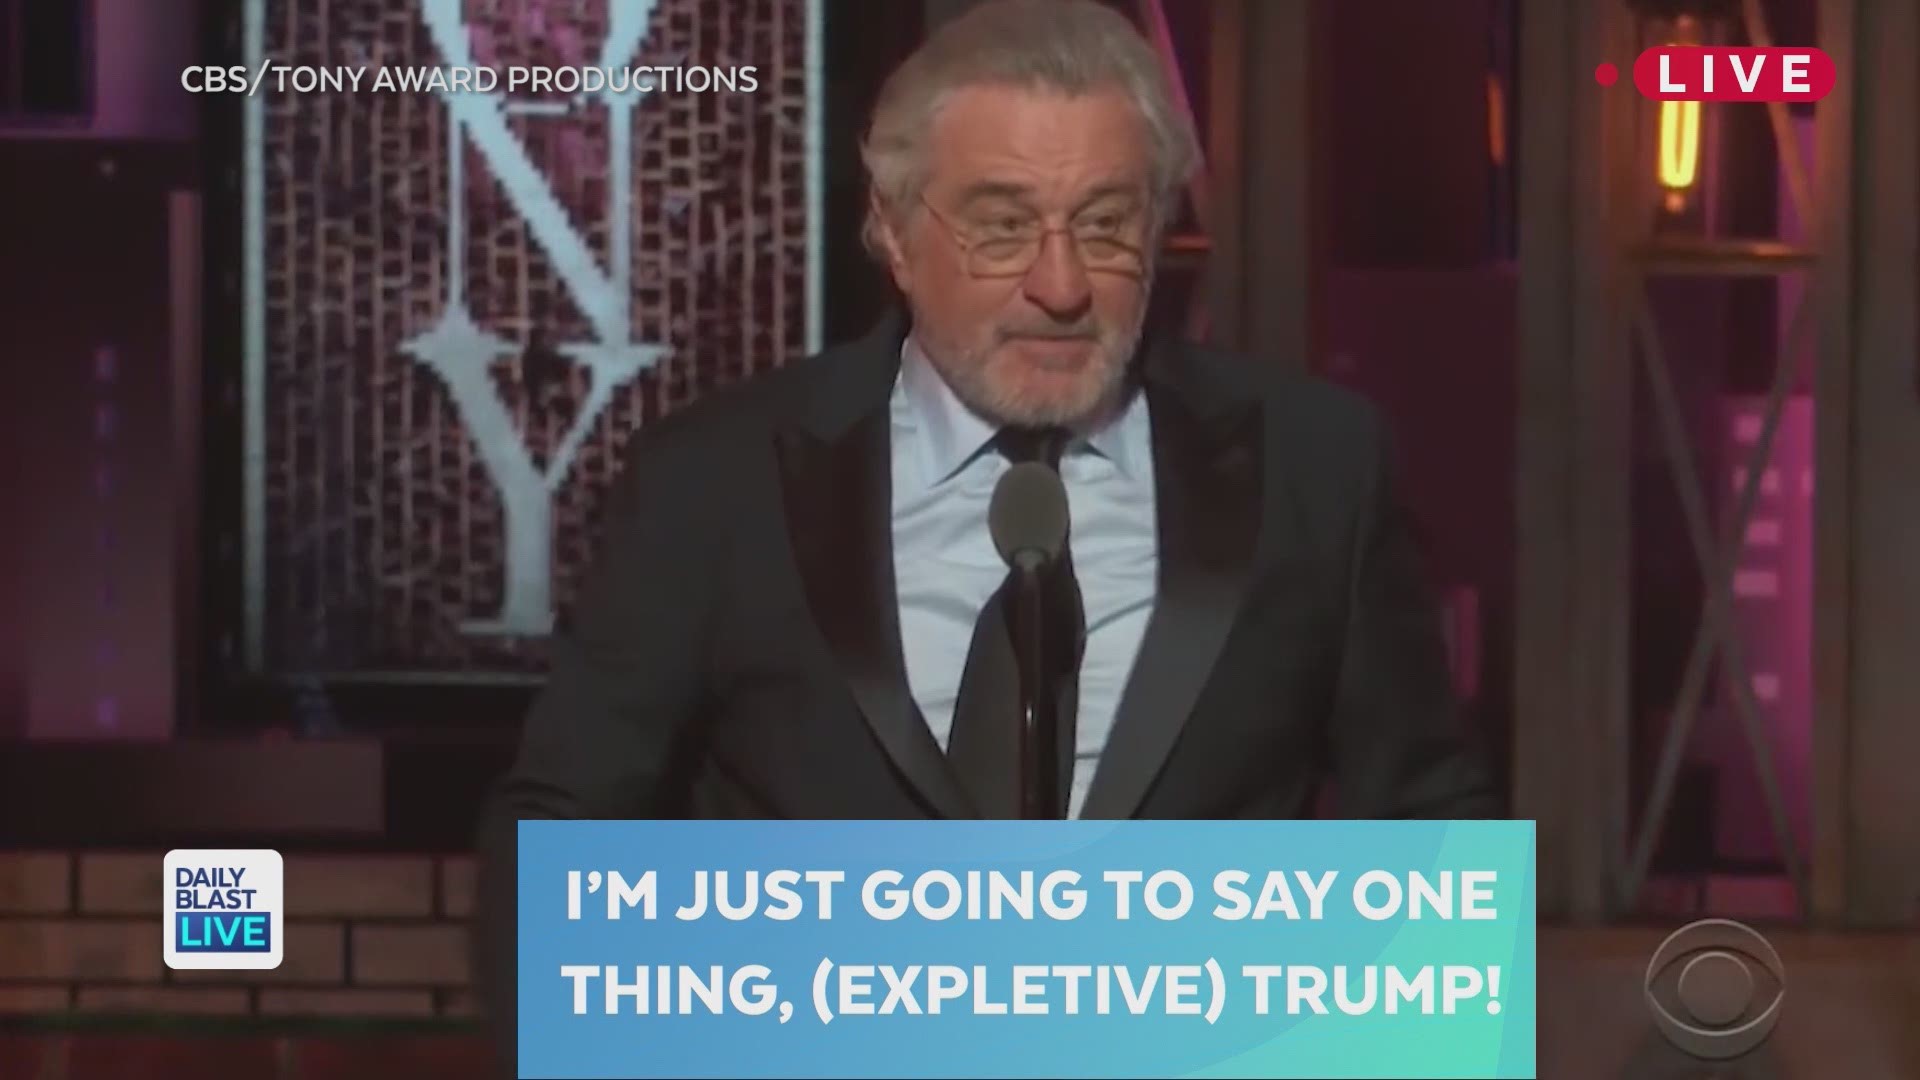 Robert De Niro drops the fbomb bashing Trump at the Tony Awards